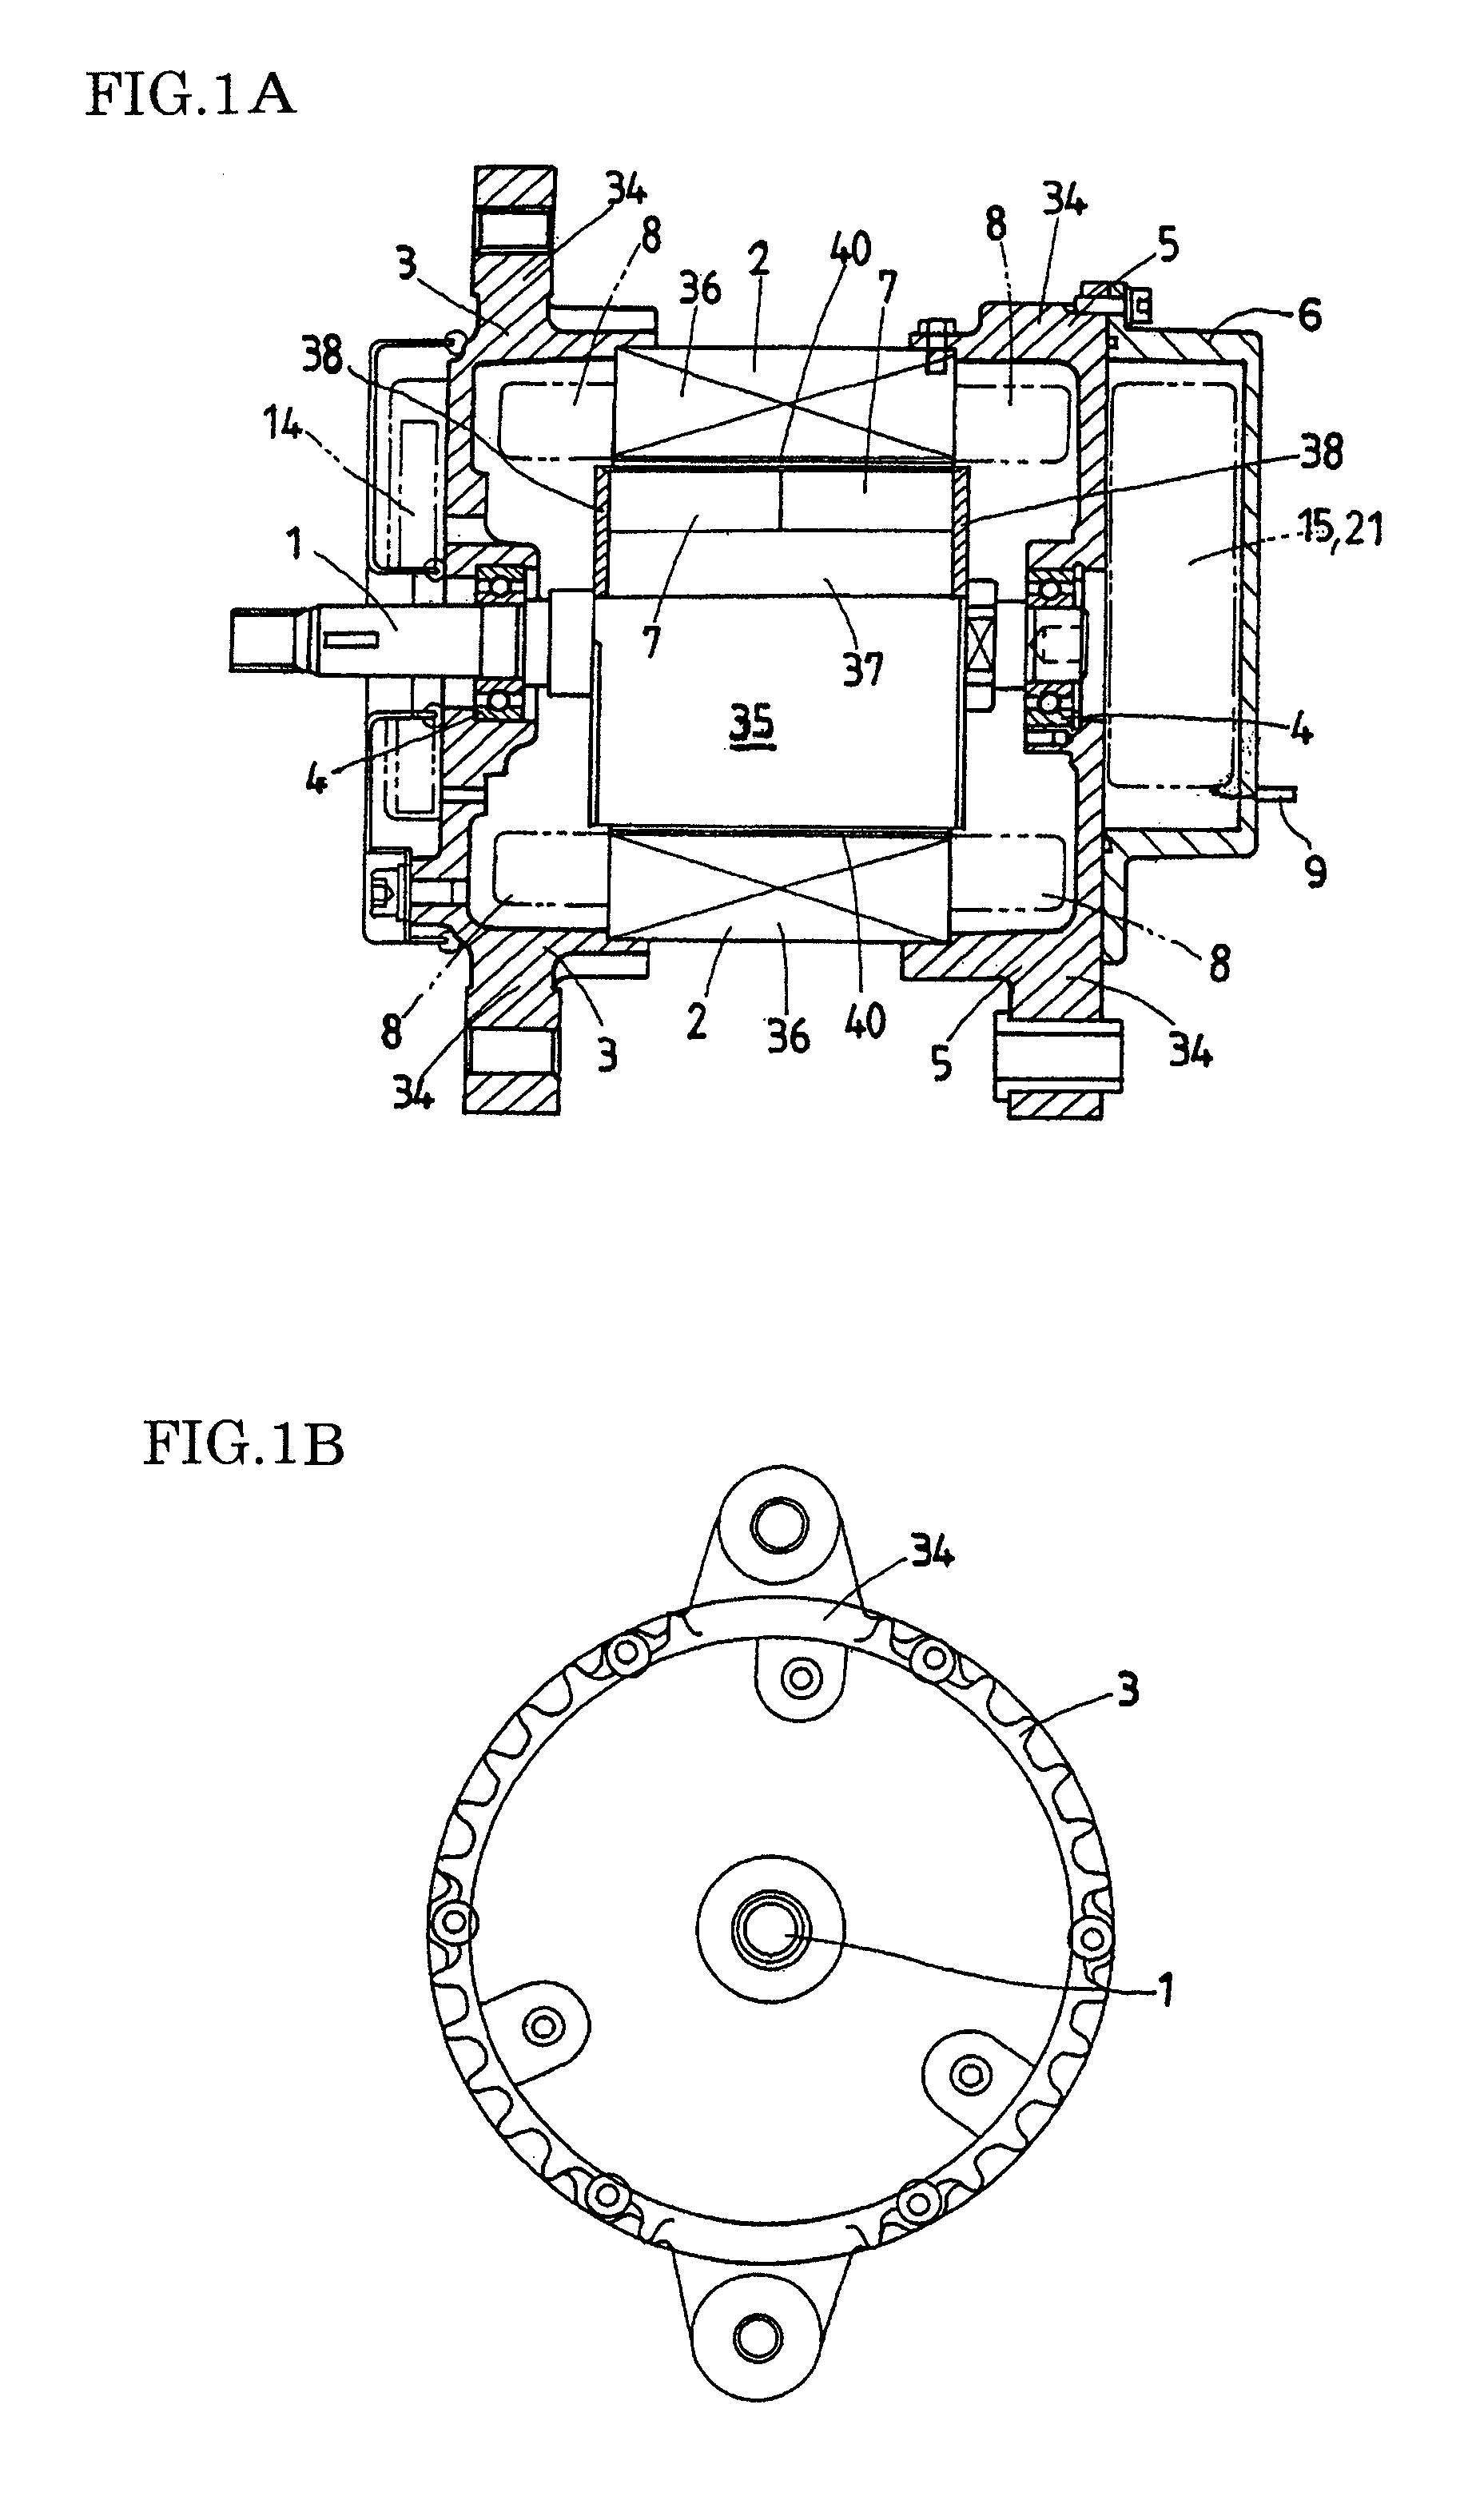 Controller of permanent magnet generator